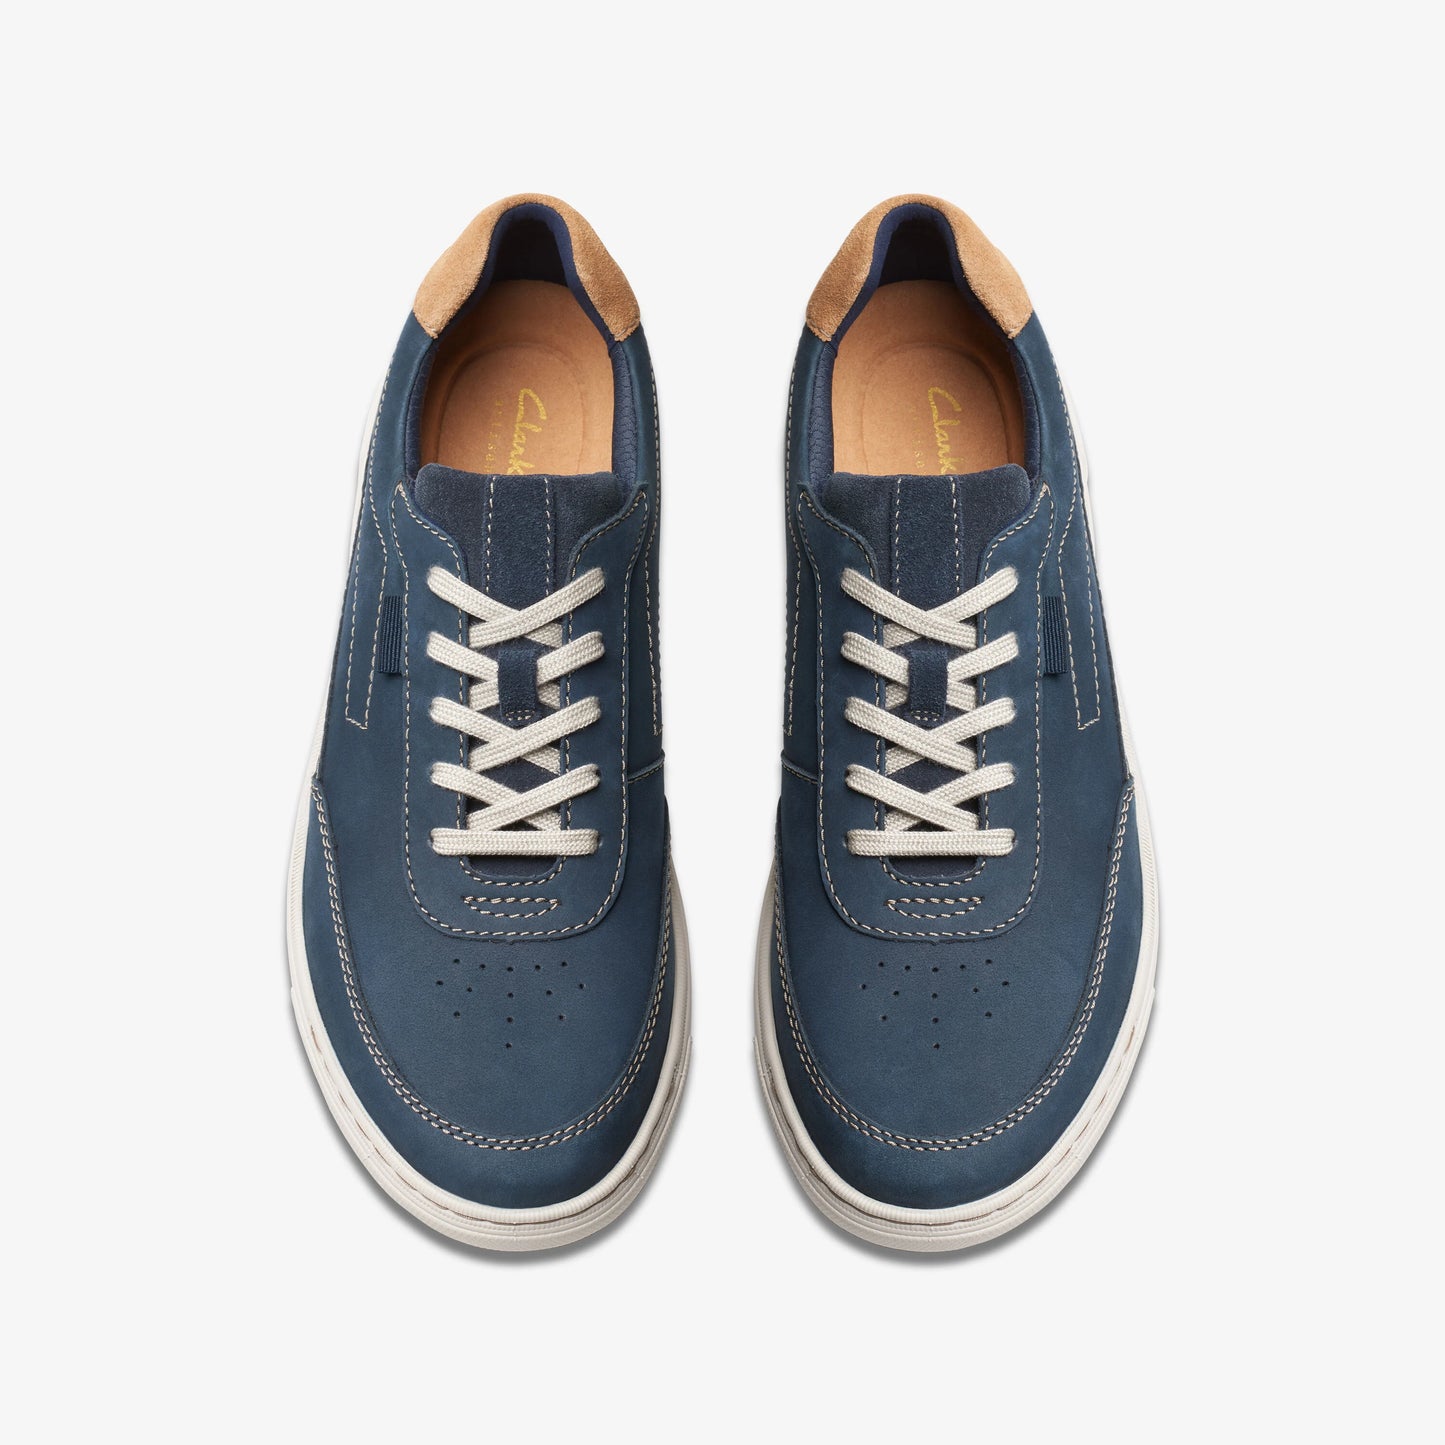 CLARKS | 남자를위한 캐주얼 신발 | MAPSTONE TRAIL NAVY NUBUCK | 파란색